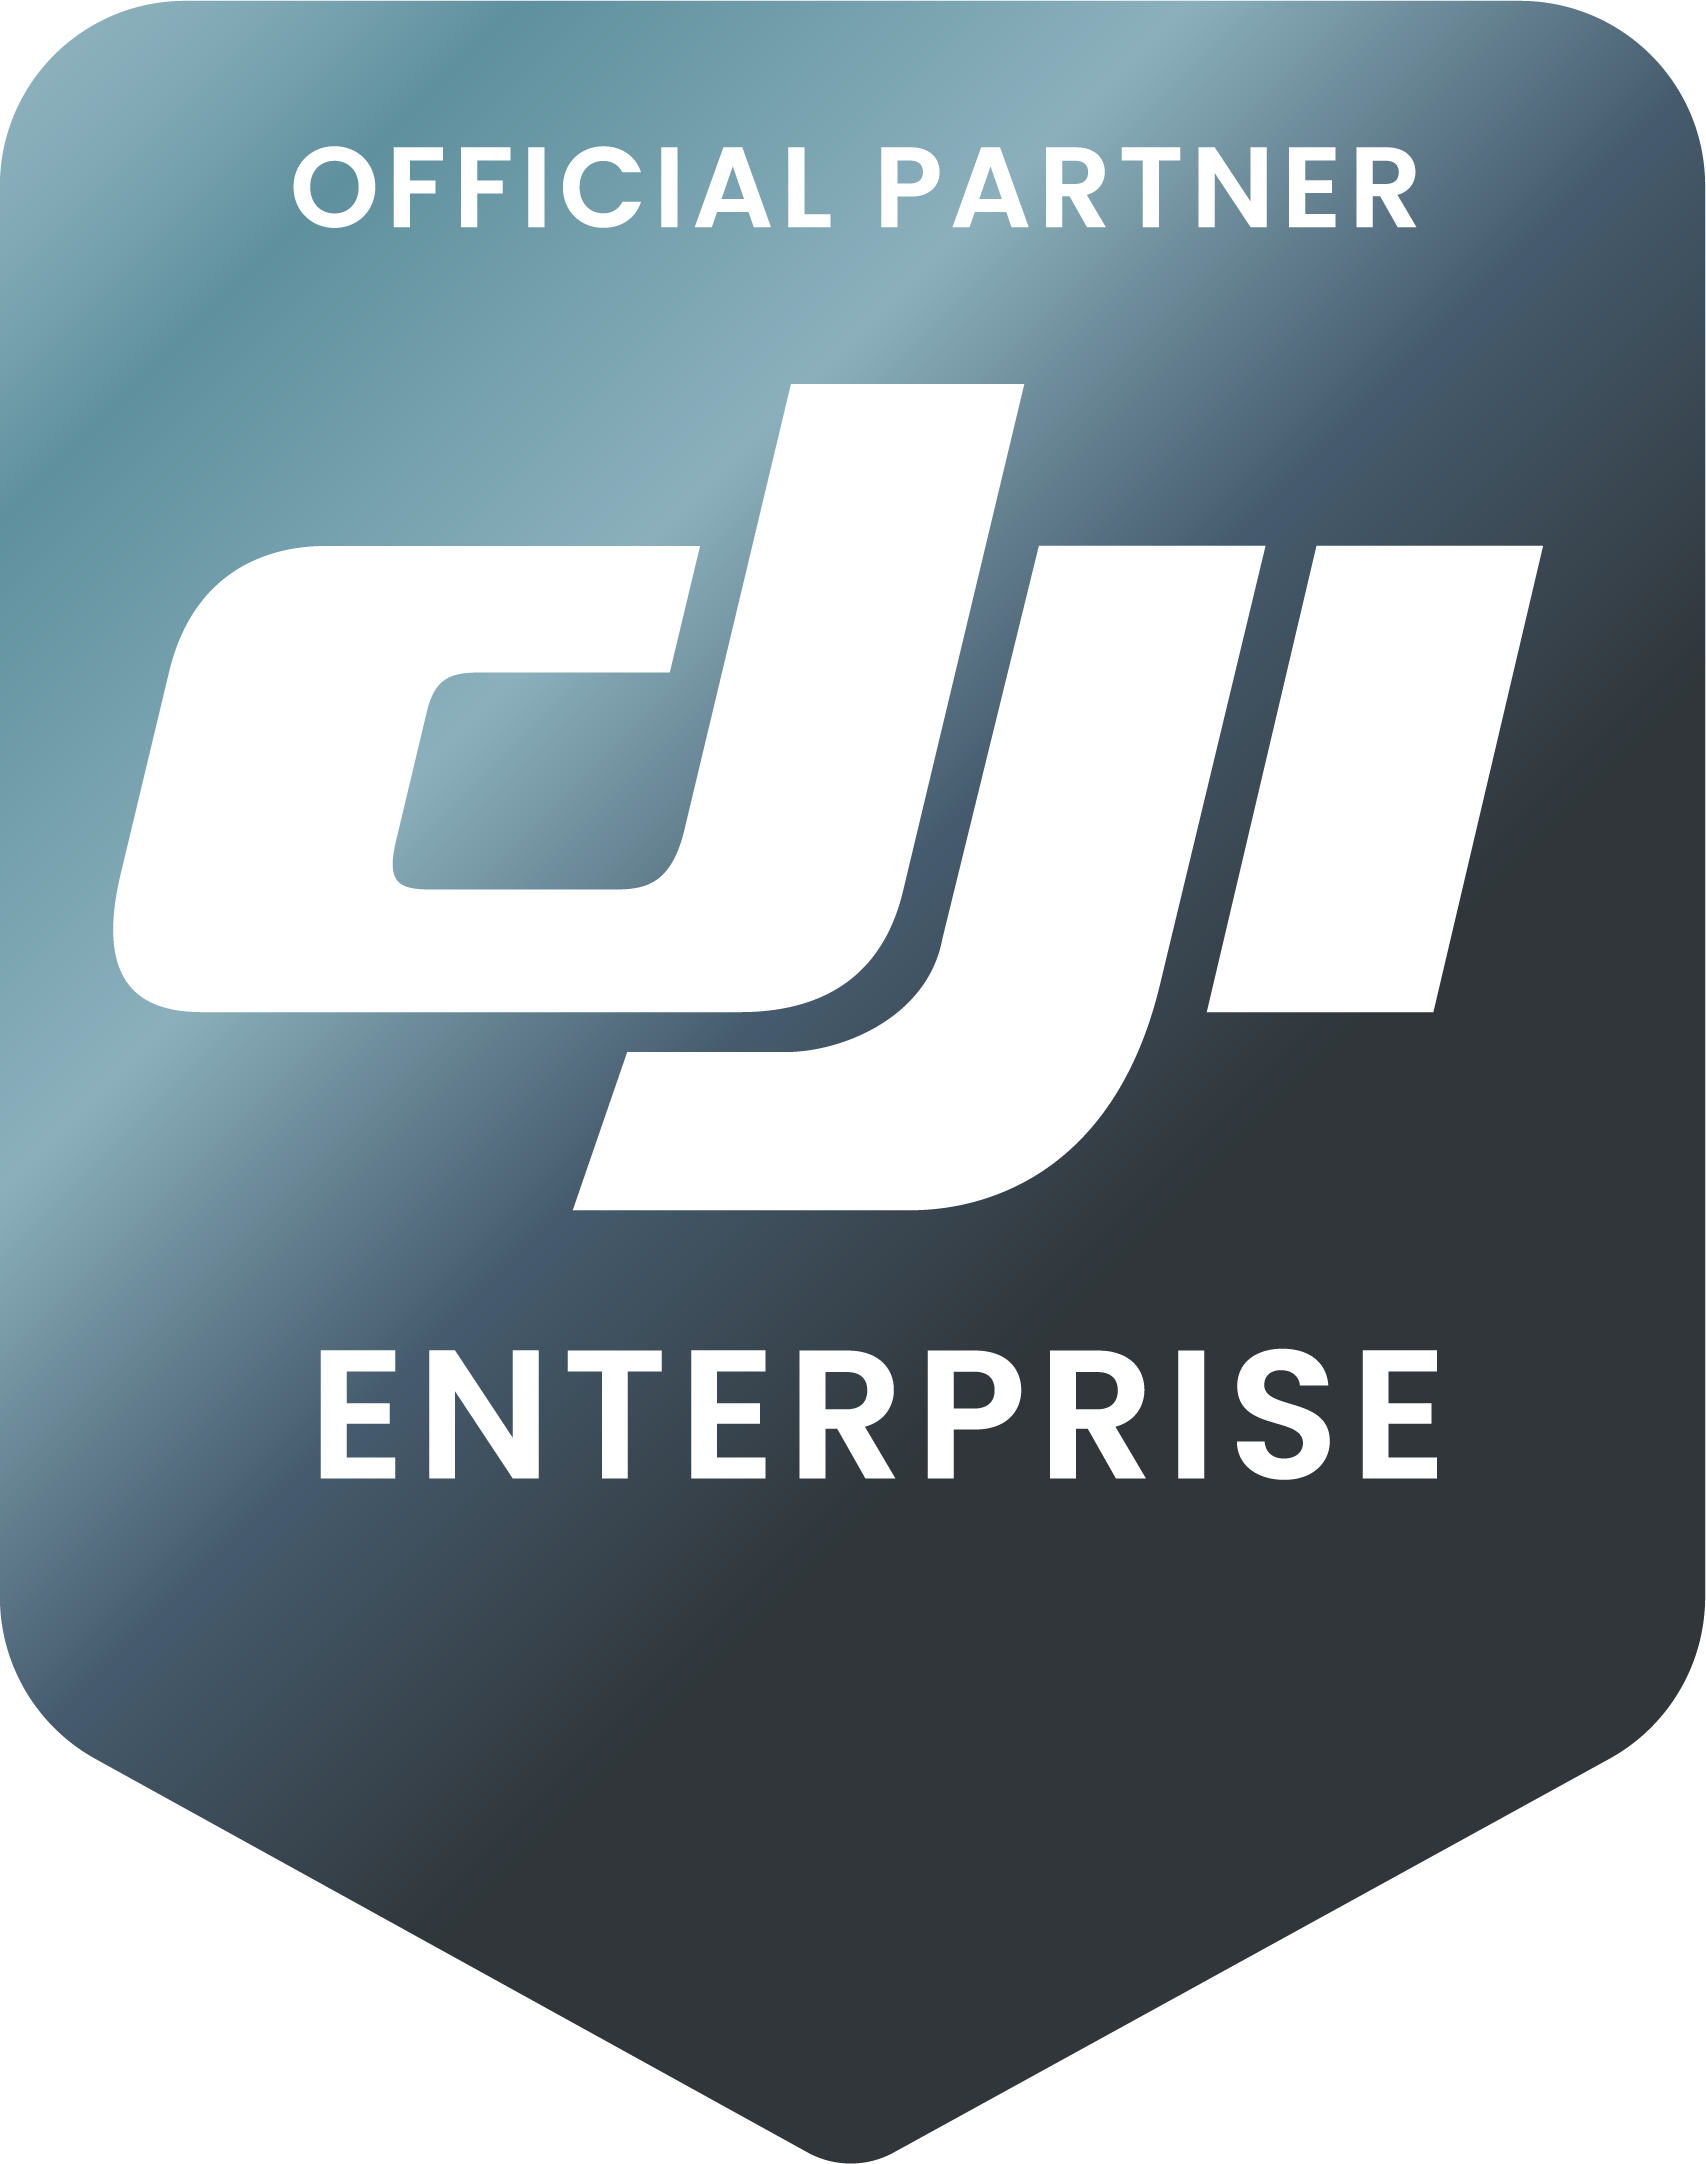 Aero Enterprise | DJI Enterprise Official Partner 2